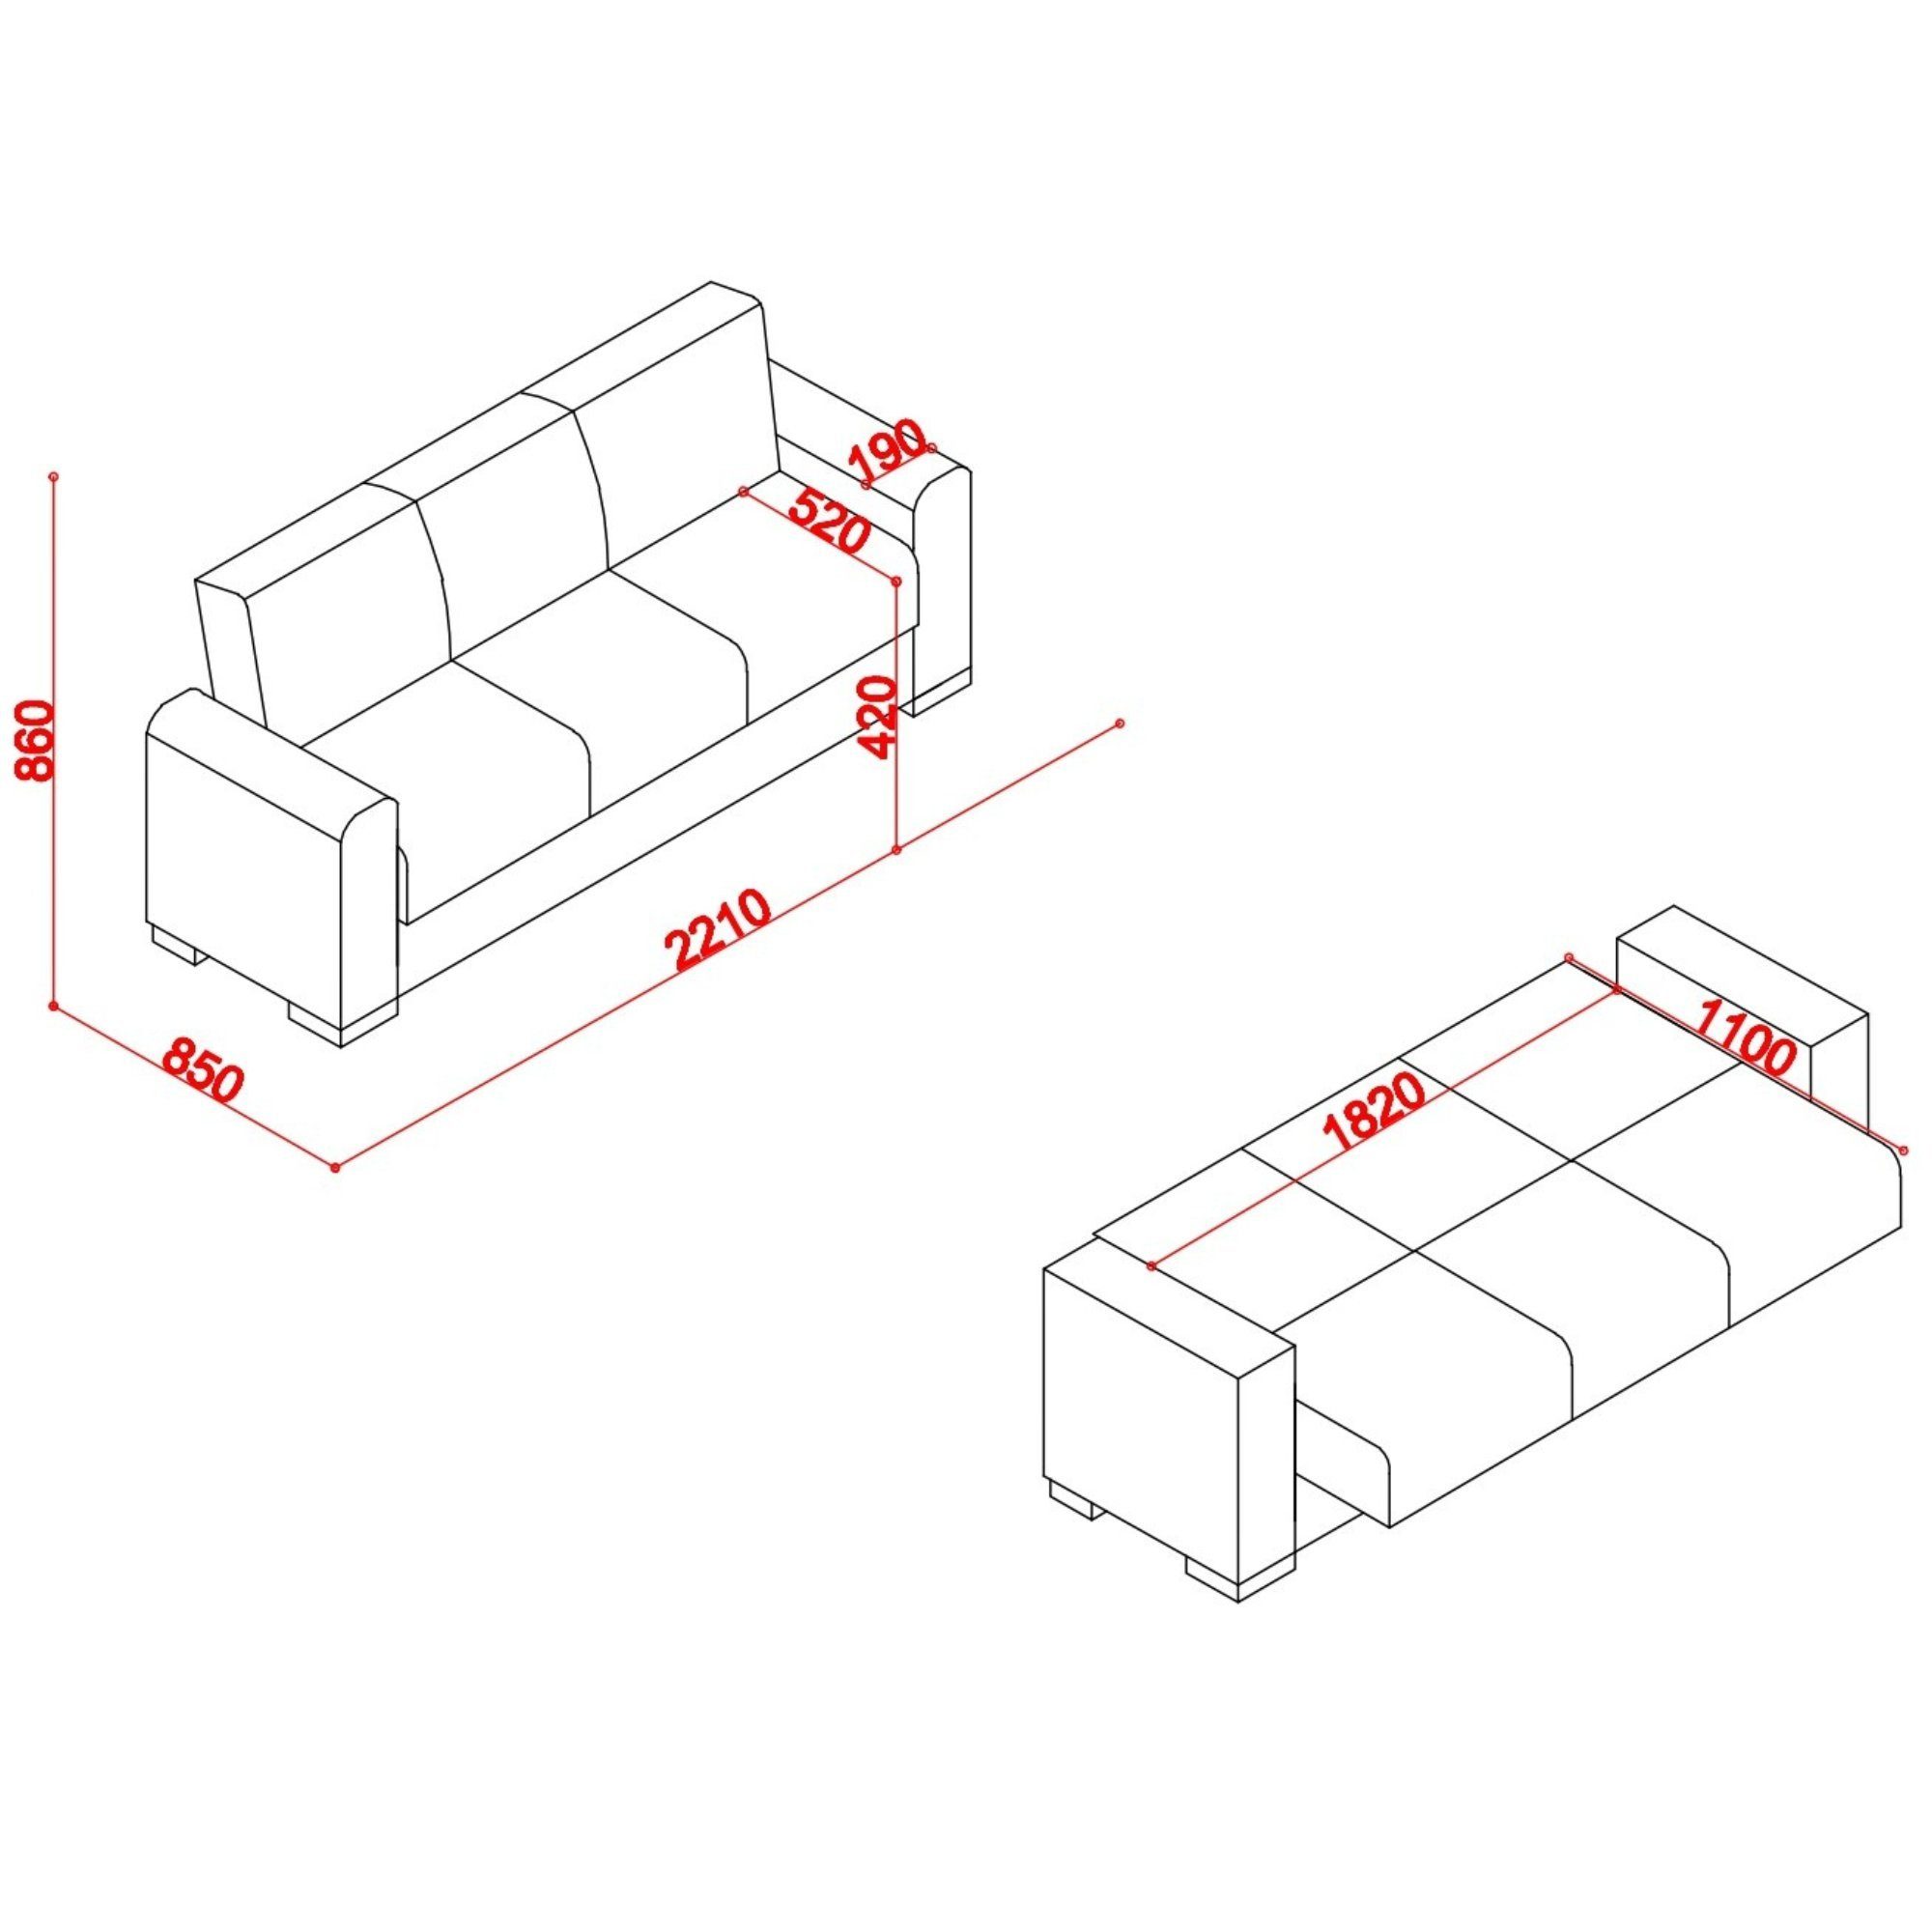 Braun 221 Sitzer, x Bettfunktion 85 Gozos Sofa Couch Leinenoptikstoff, 86 Series Palamos x cm 3 Gozos